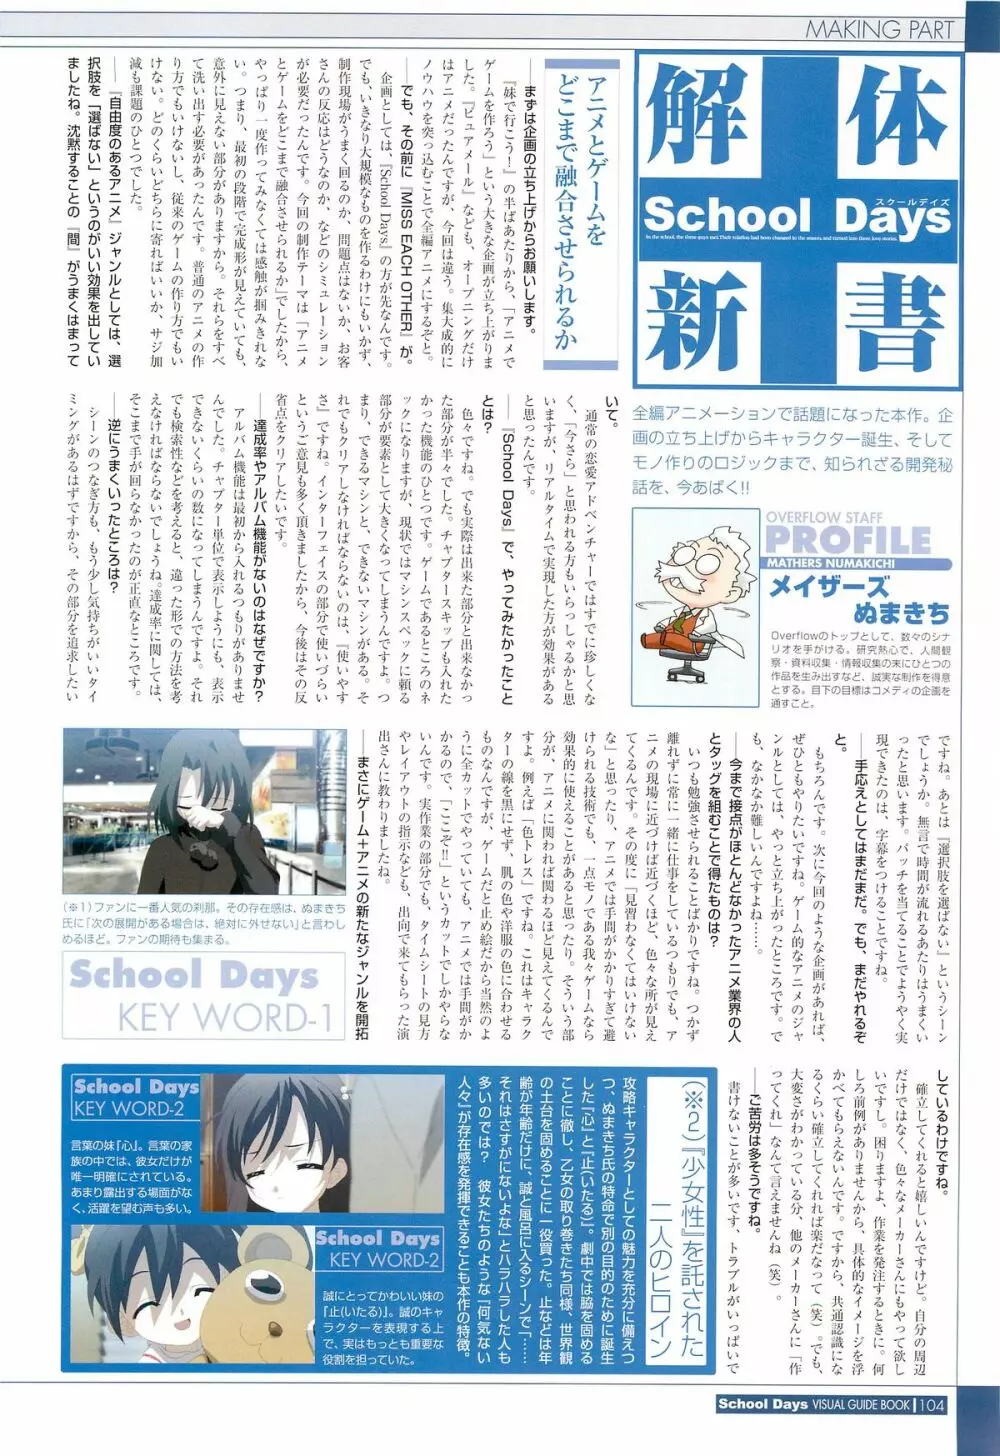 School Days ビジュアル・ガイドブック 106ページ